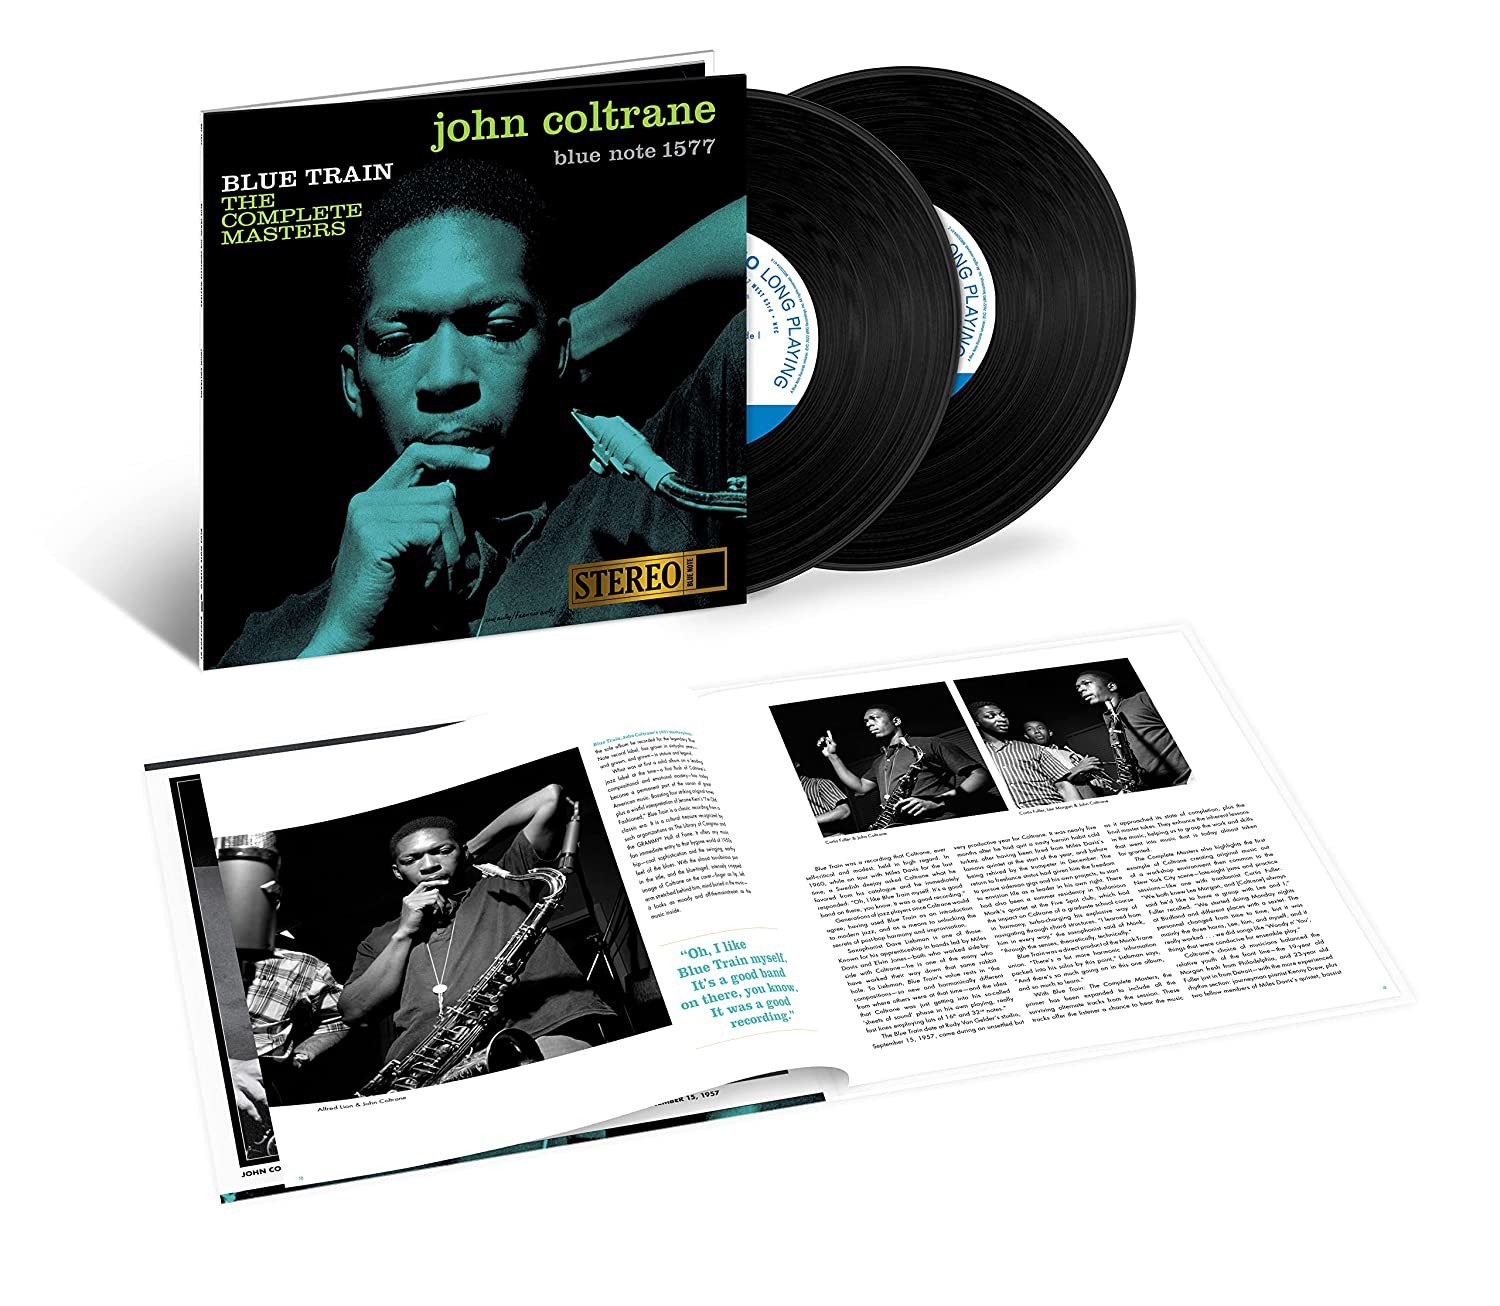 John Coltrane - Blue Train - The Complete Masters (Stereo Version) - Tone Poet Vinyl - 2LP (LP)